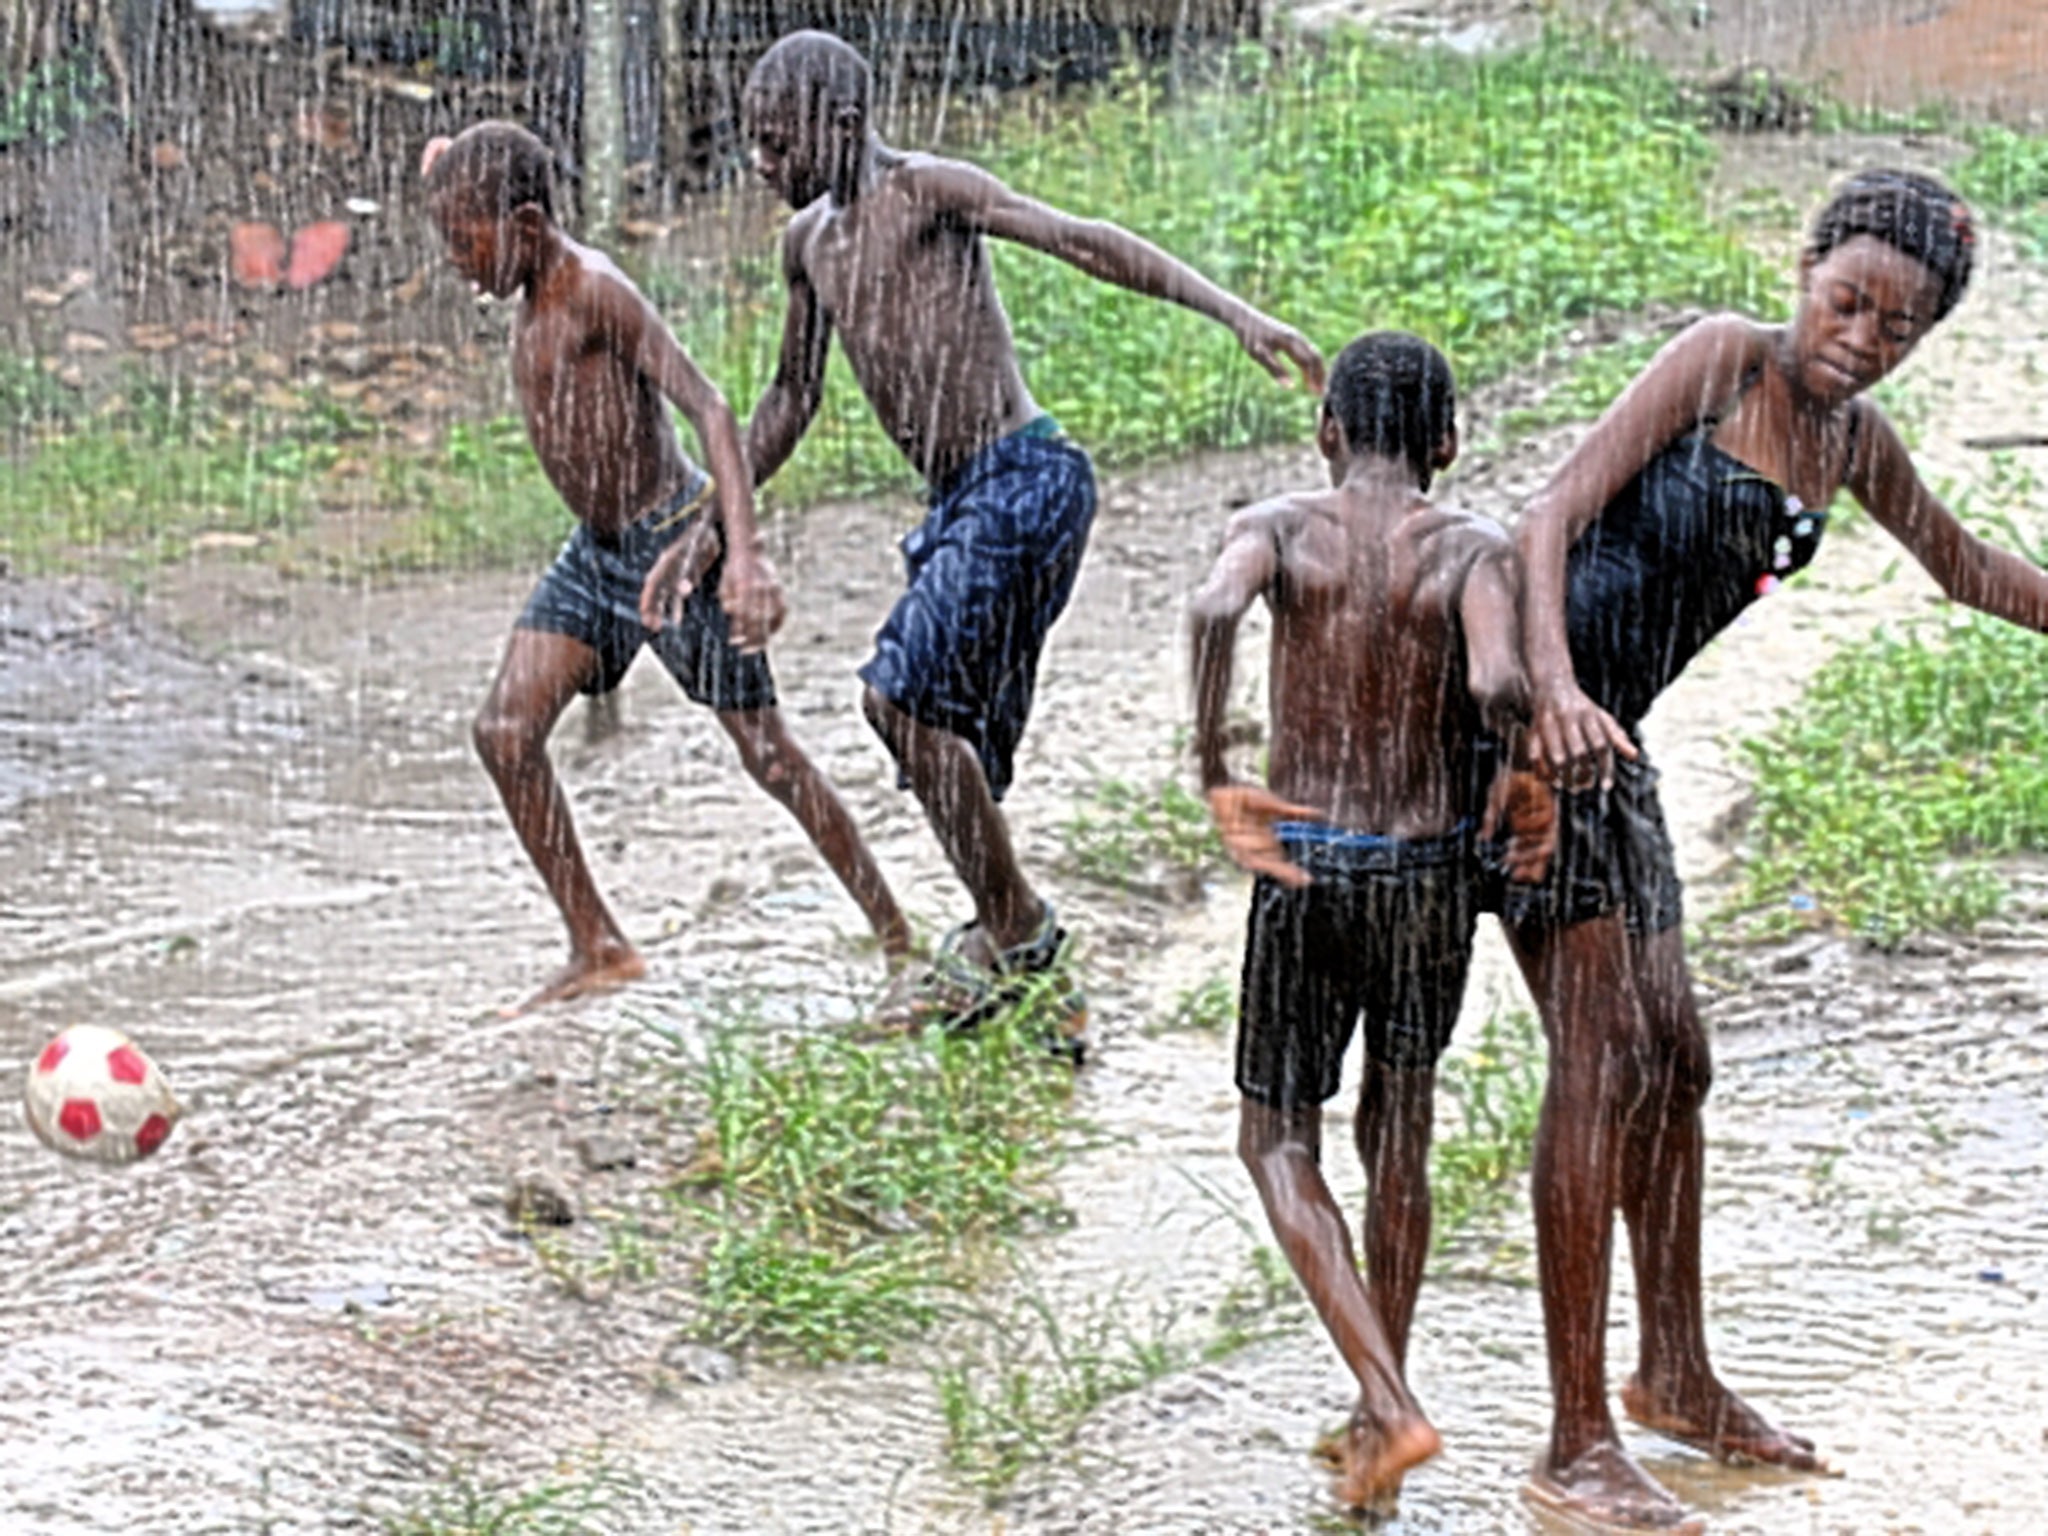 Children play football in the rain in Bata